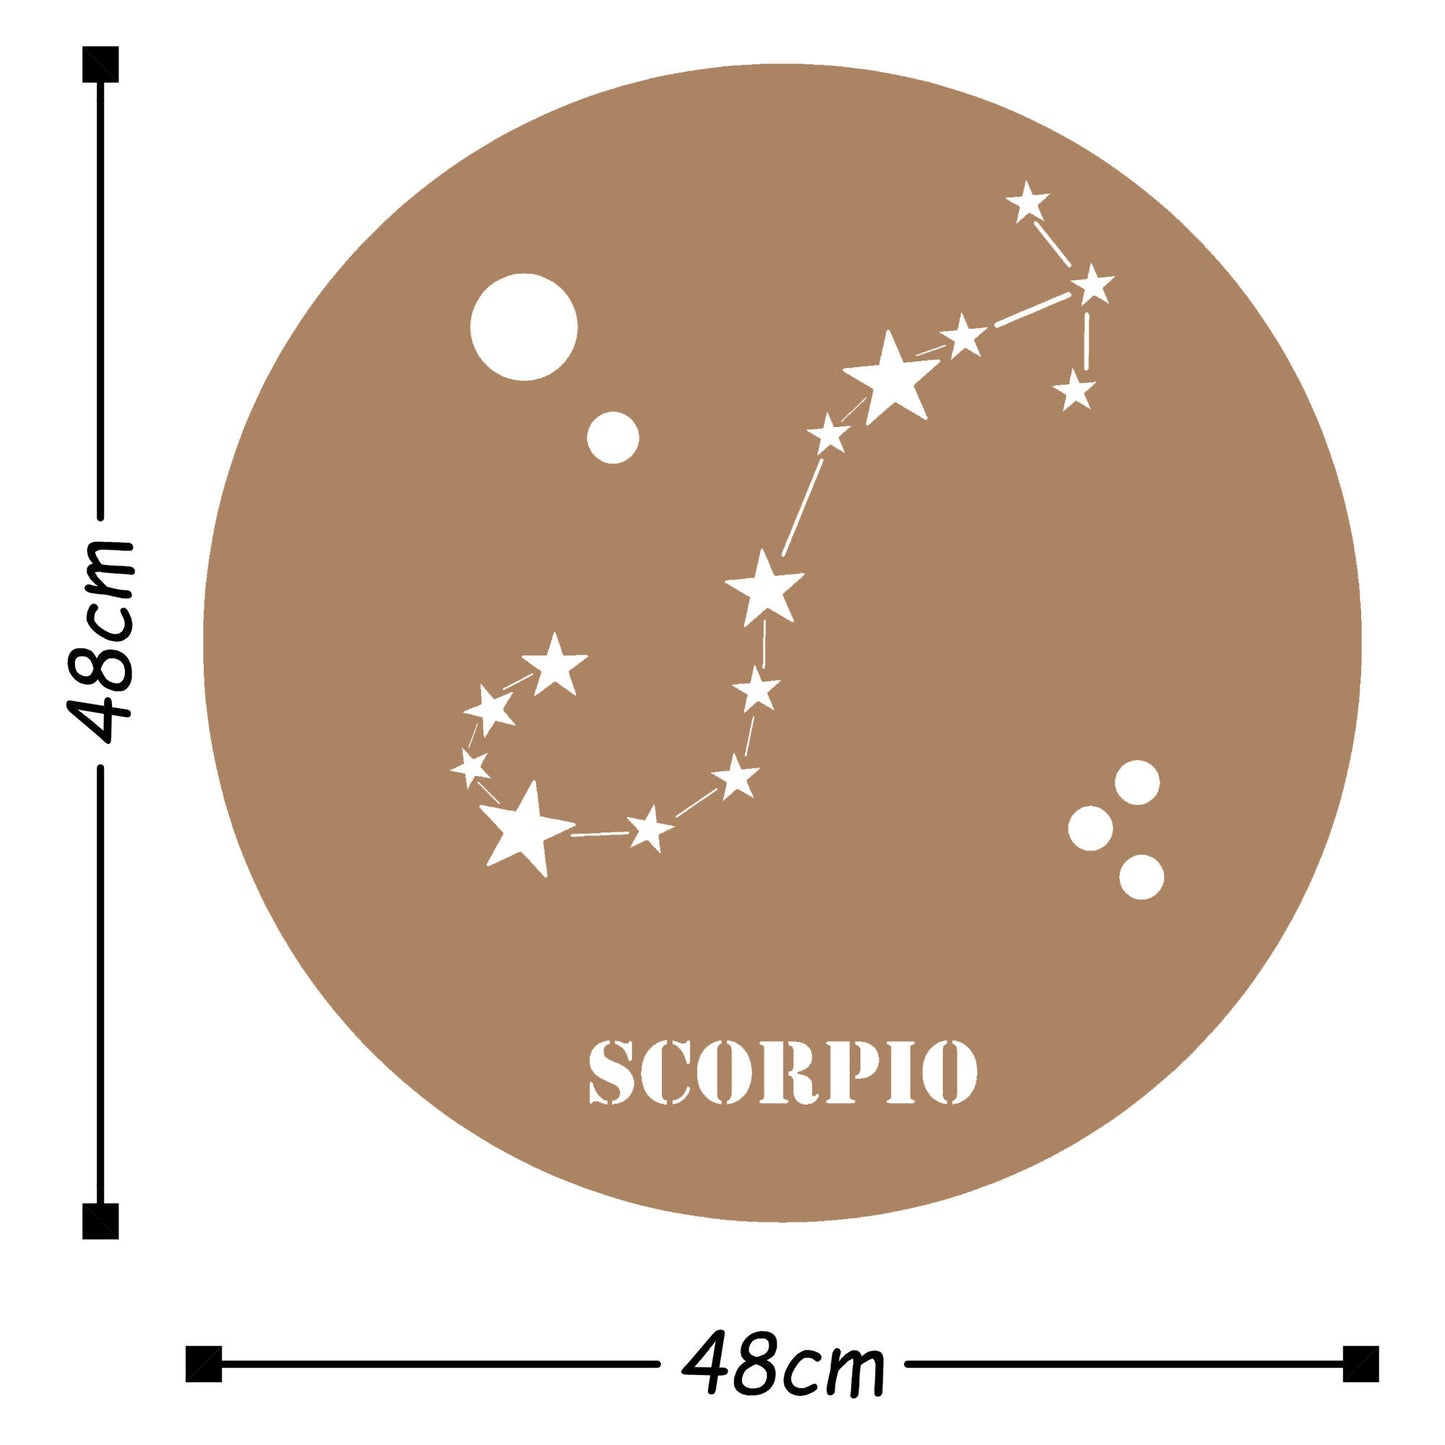 Scorrpıo Horoscope - Copper - Decorative Metal Wall Accessory